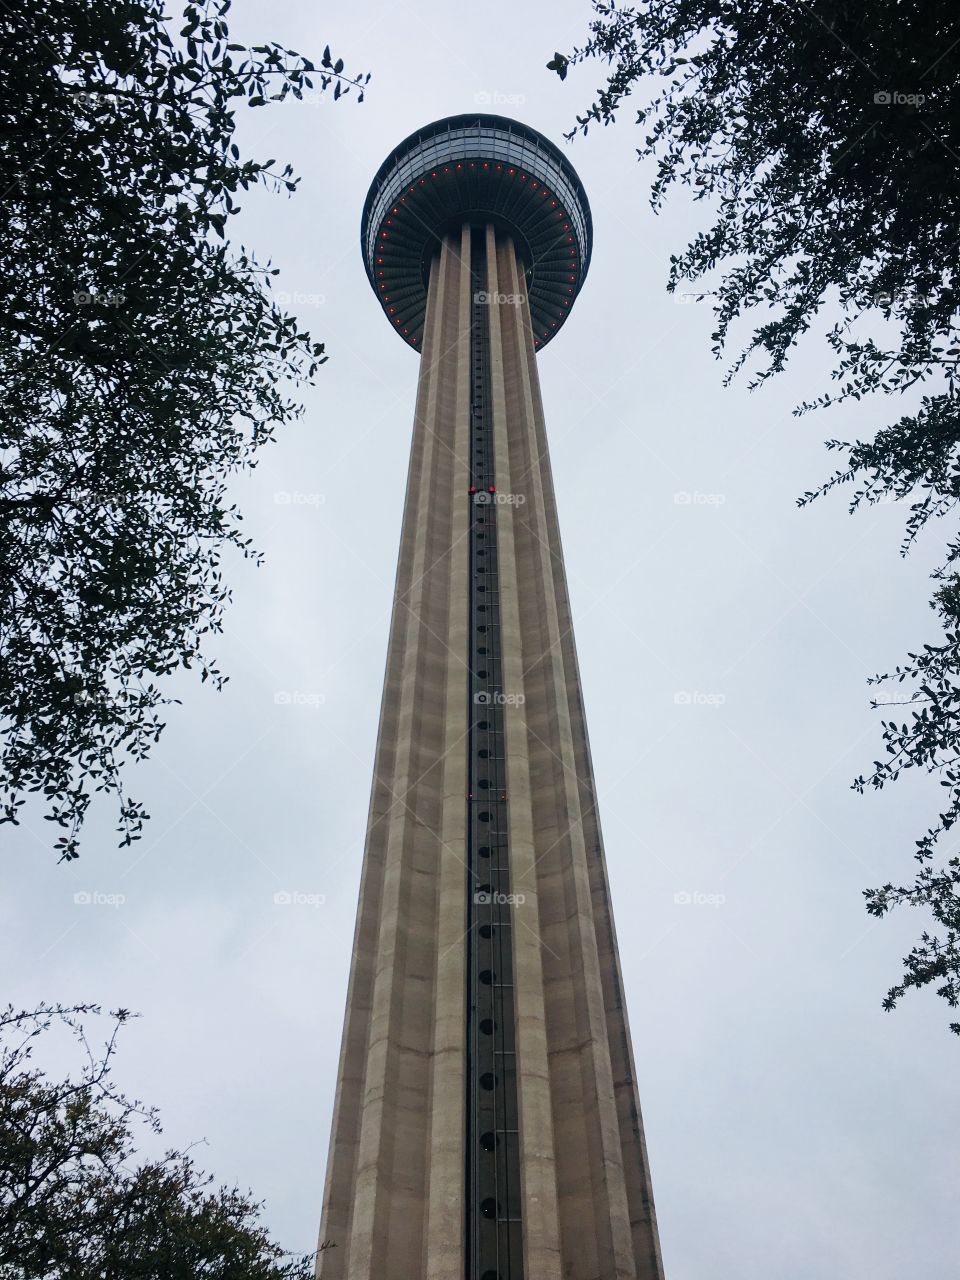 Tower of America’s, San Antonio, TX